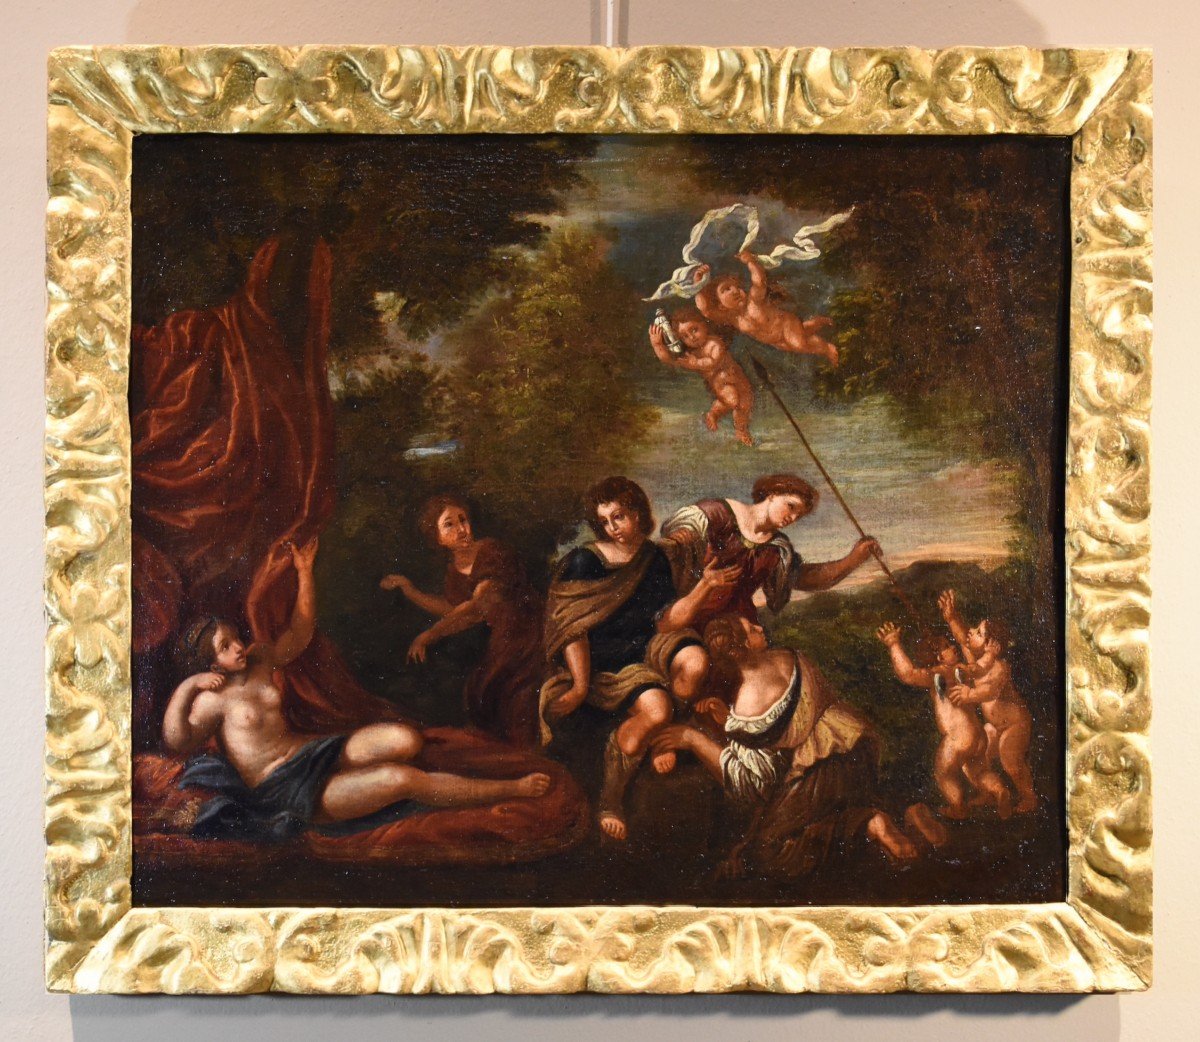 Diana e le sue ninfe sorprese da Atteone, Francesco Albani (Bologna 1578 - 1660) bottega di 